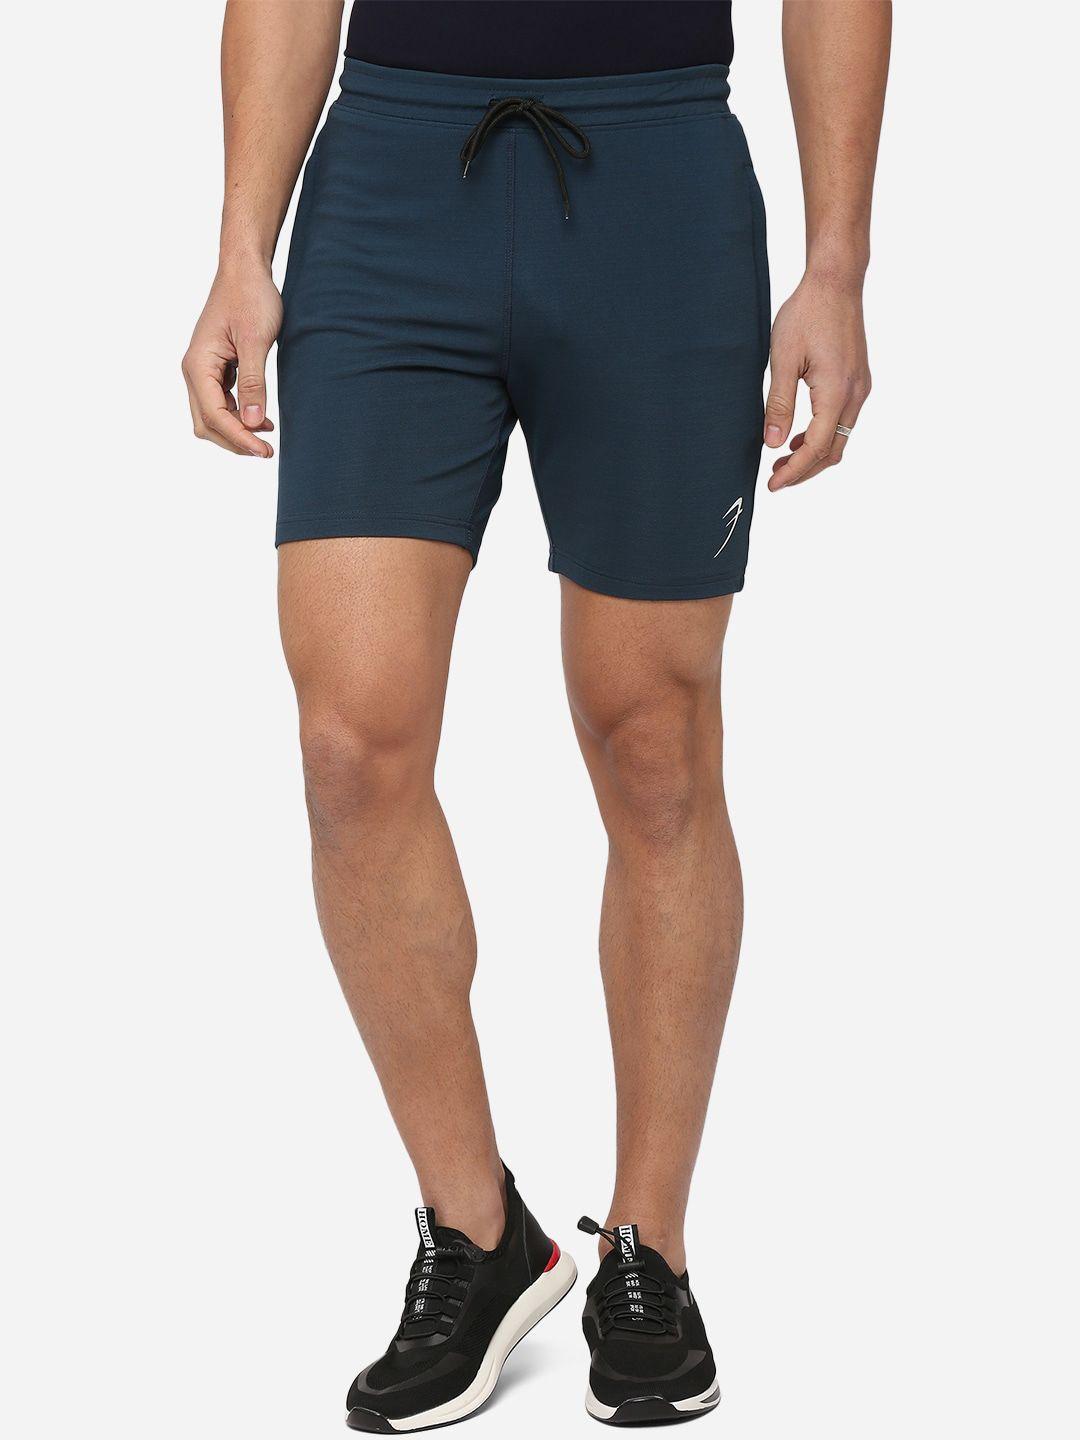 fuaark-men-teal-blue-slim-fit-training-or-gym-sports-shorts